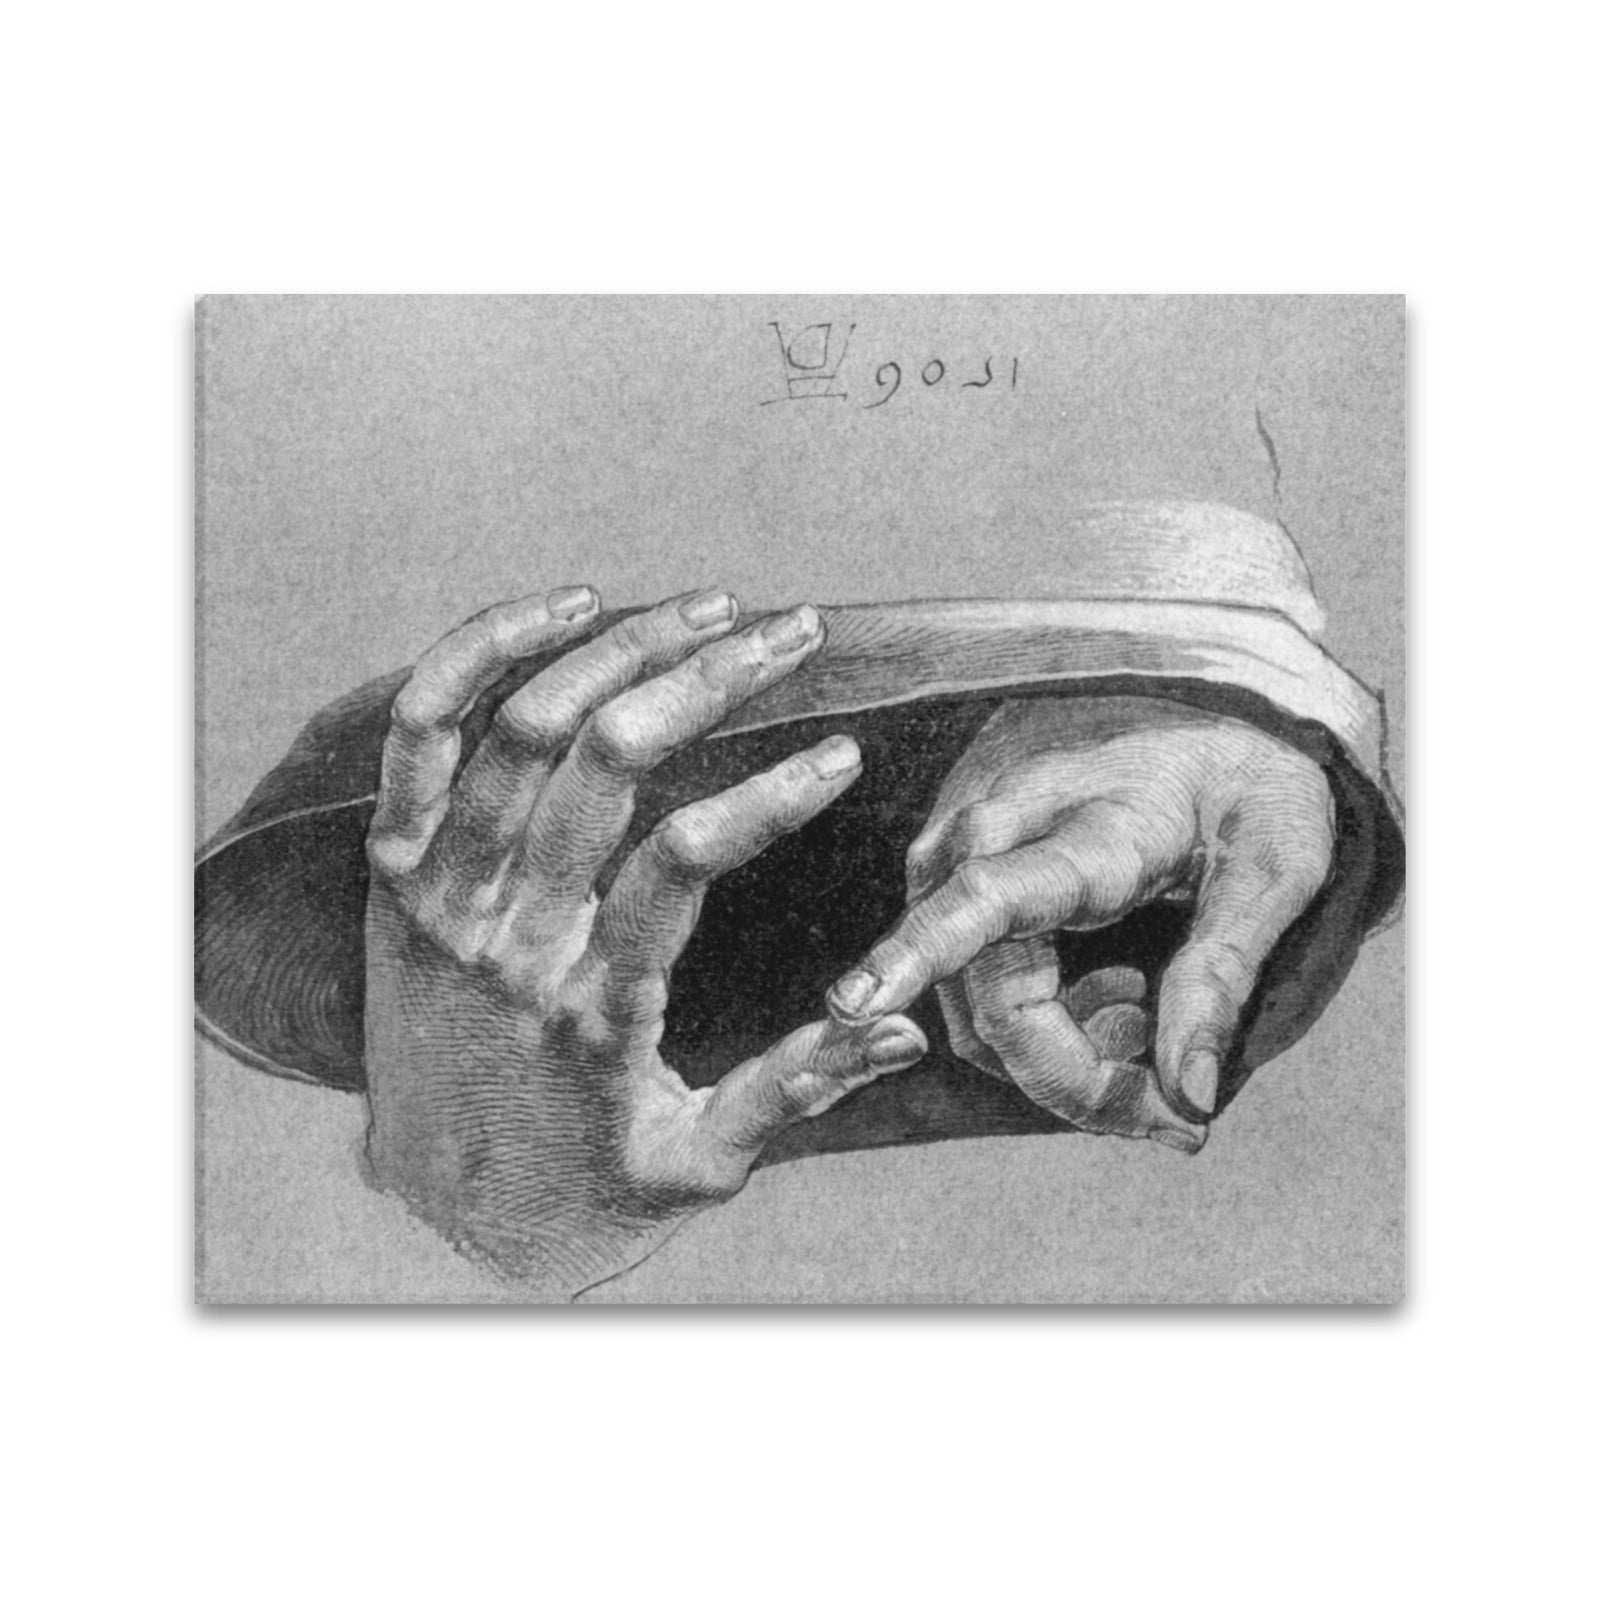 ALBRECHT DURER - HANDS OF 12 YEAR-OLD CHRIST - CANVAS PRINT 20"x 24"